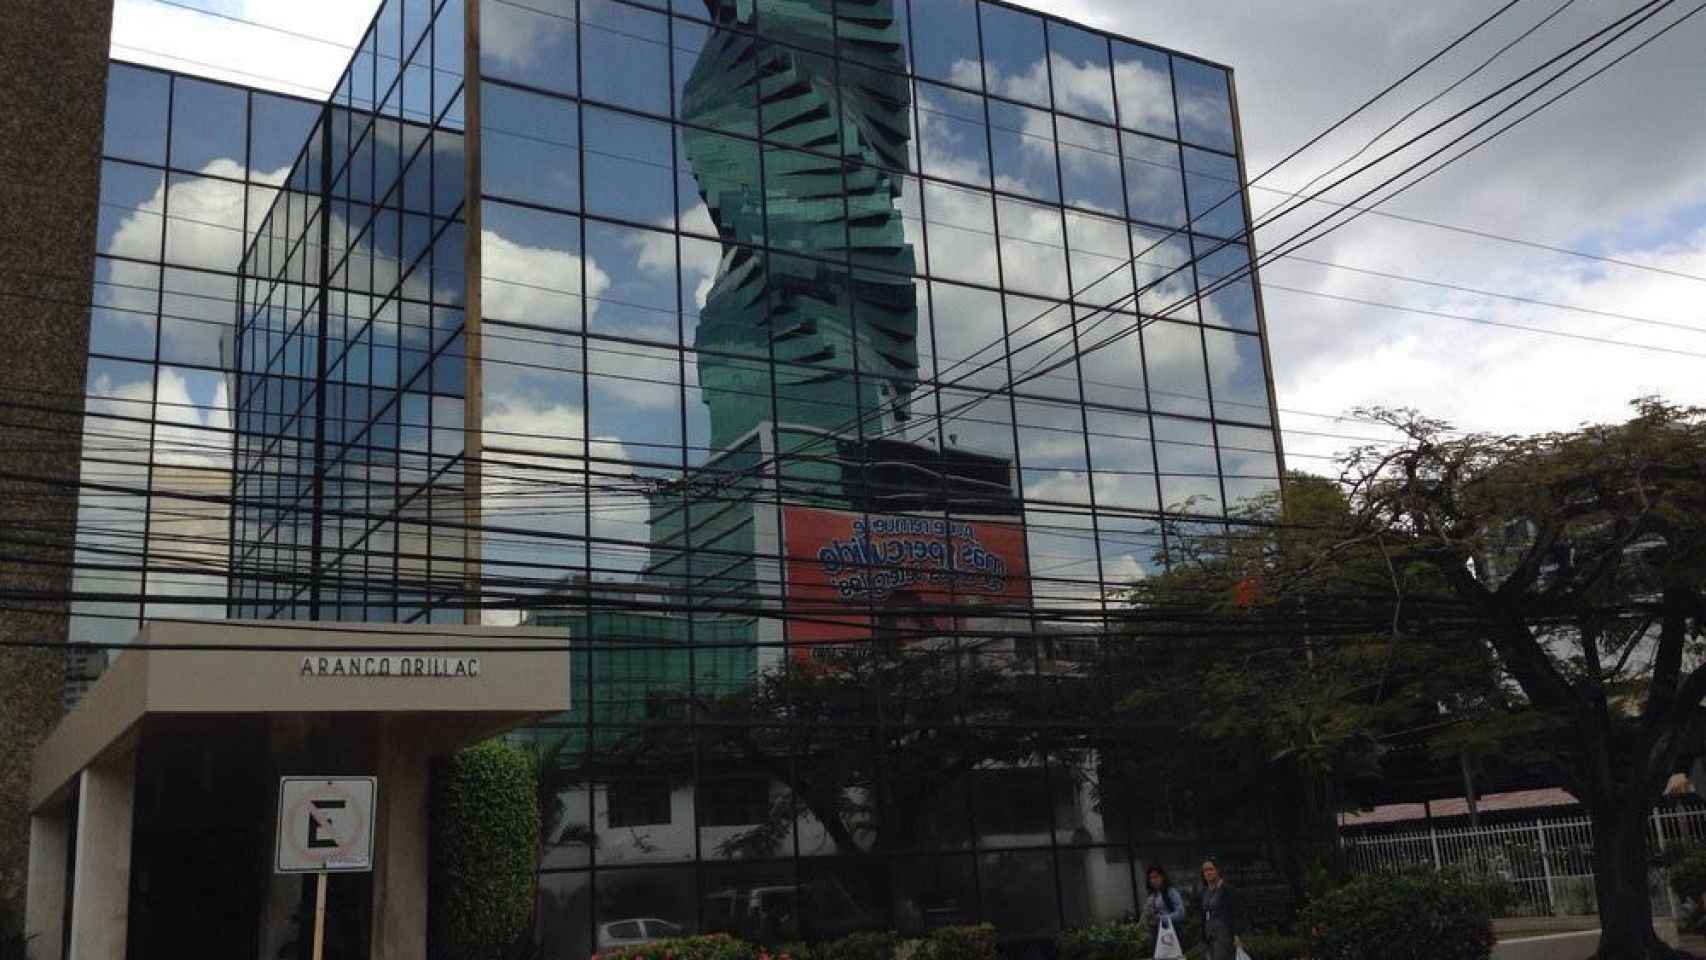 oficinas-Mossack-Fonseca-Ciudad-Panama_114499549_3251271_1706x960.jpg